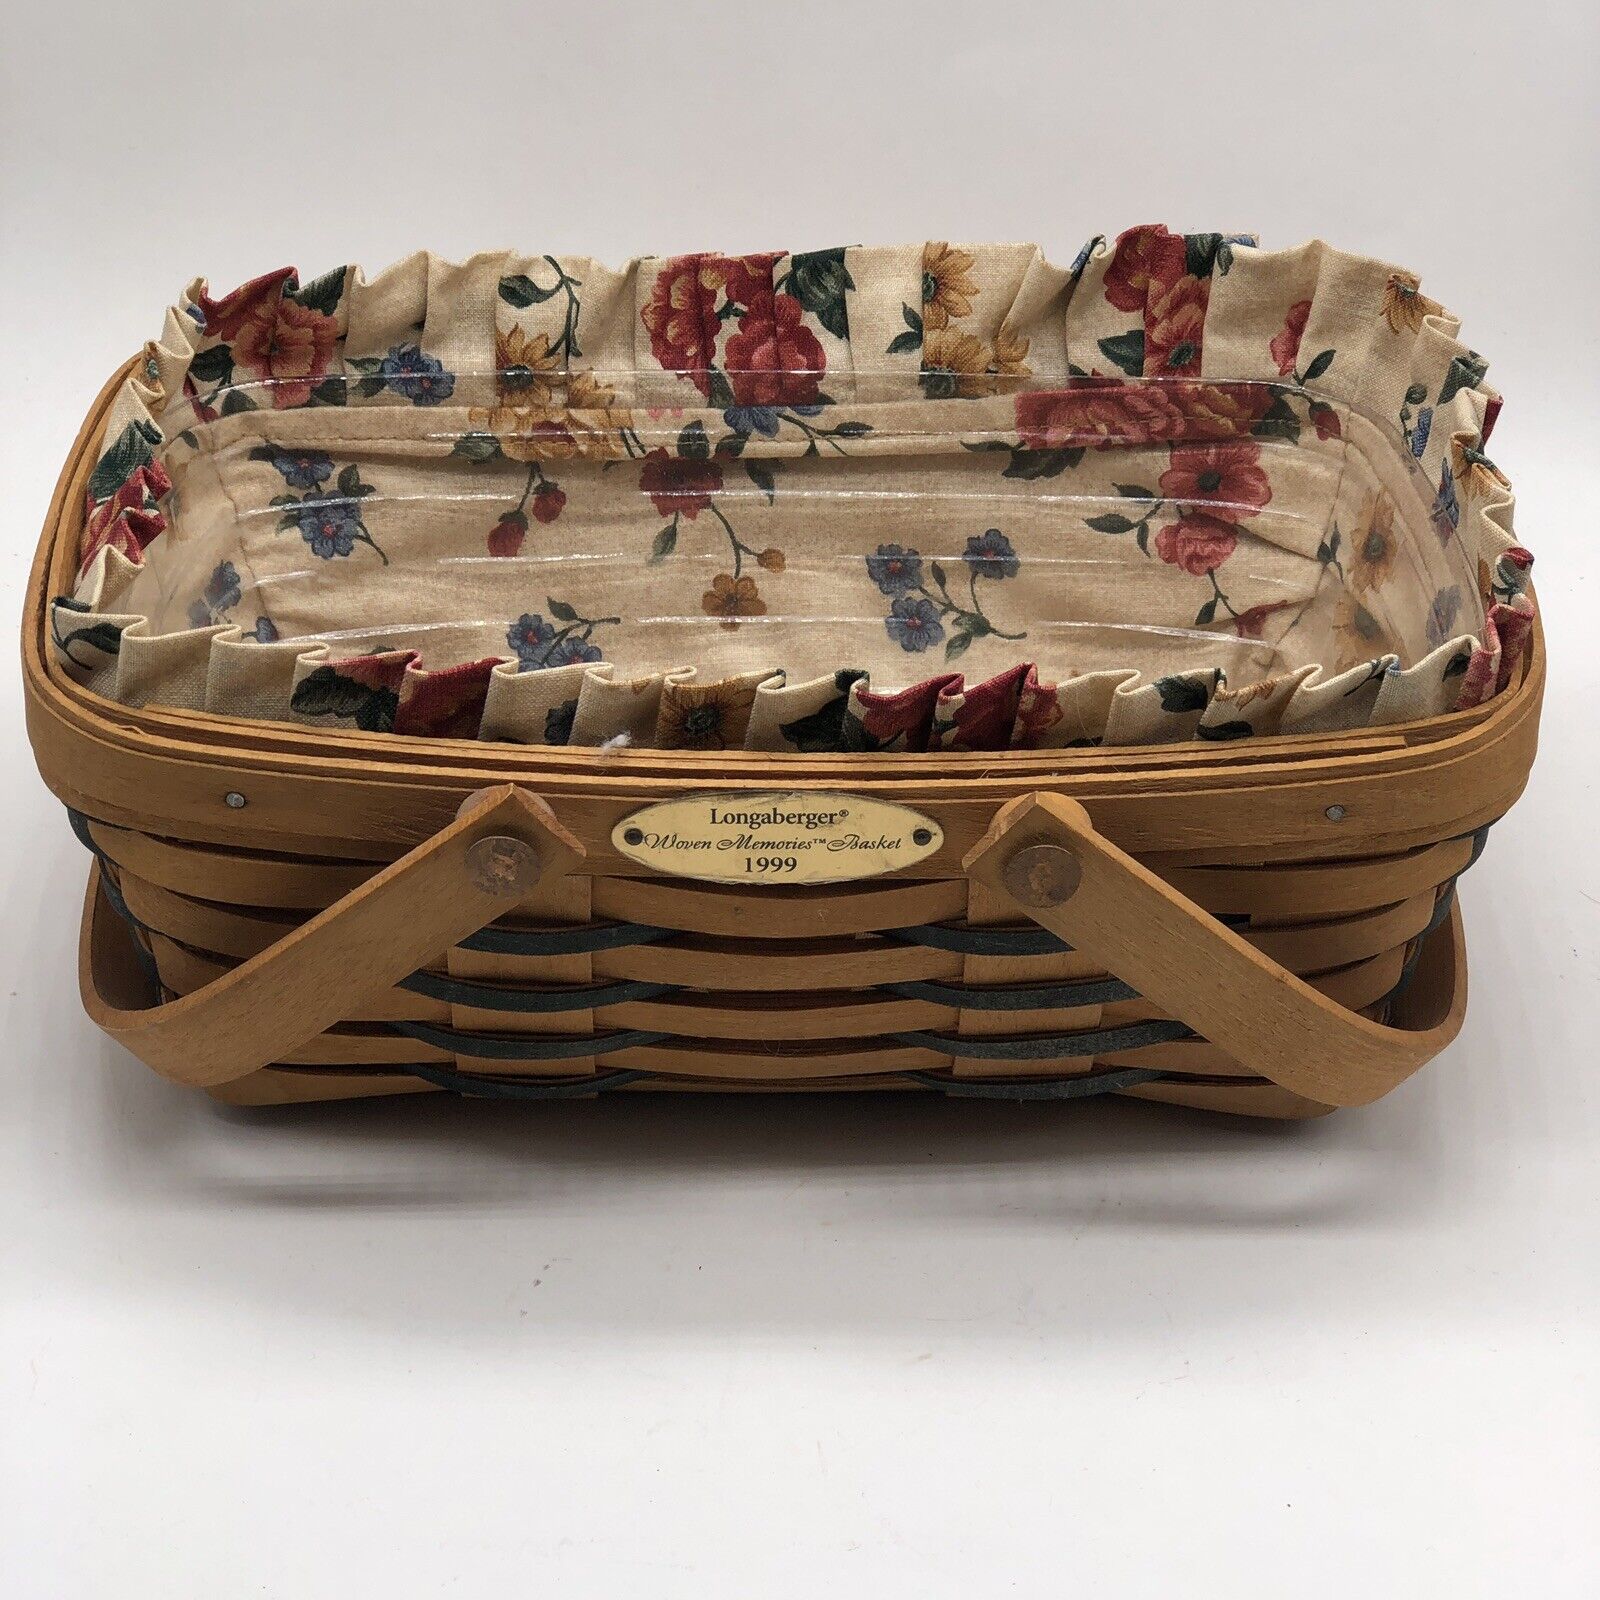 Longaberger Woven Memories 1999 Handled Basket Protector With Floral Liner